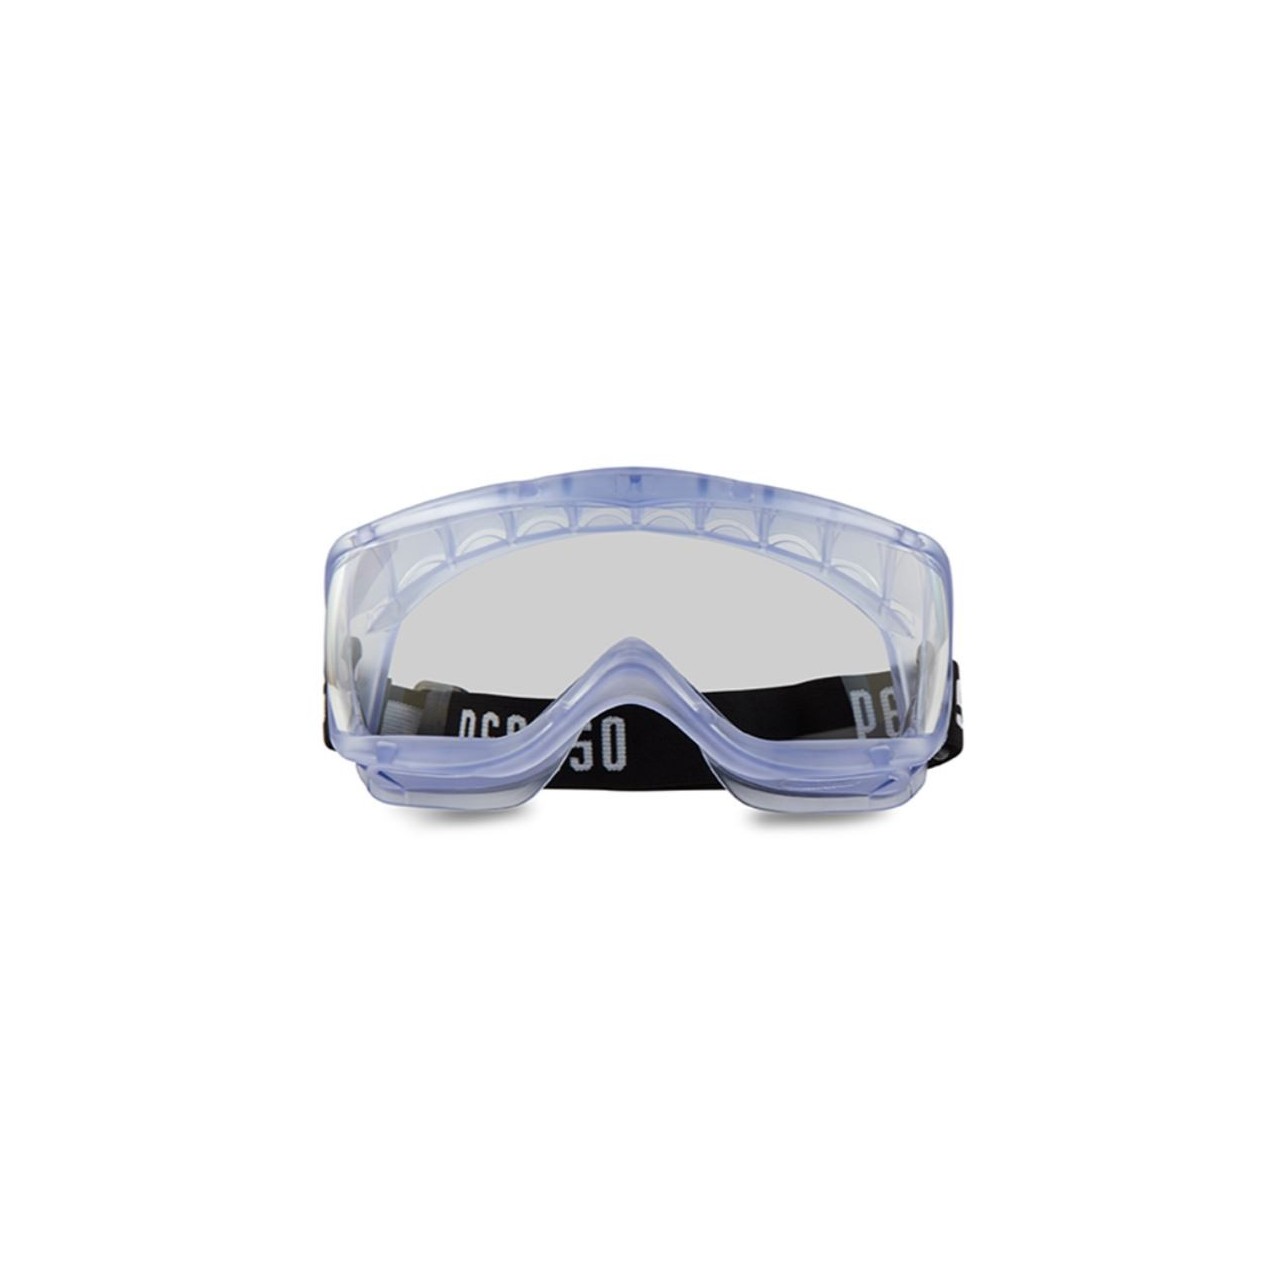 Gafas de seguridad Pegaso XL sobregafa